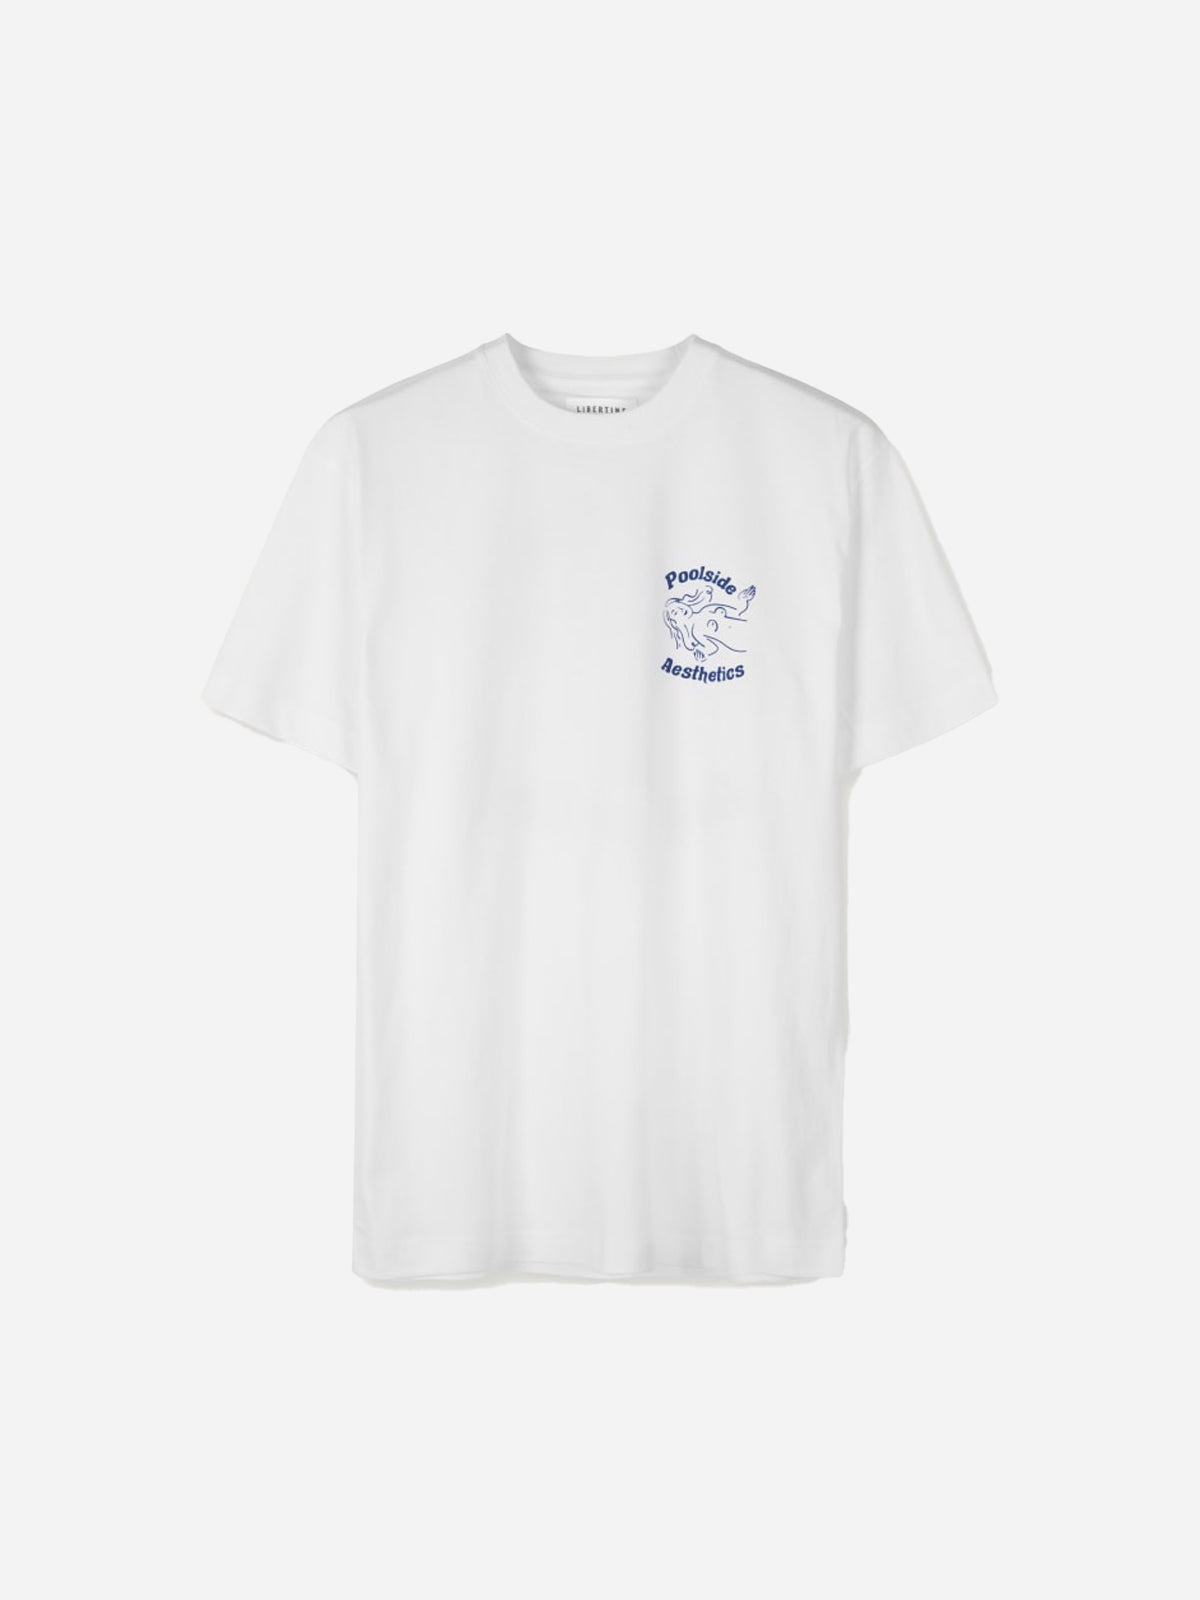 BEAT POOLSIDE / HVID T-shirt - Libertine-Libertine - Kul og Koks